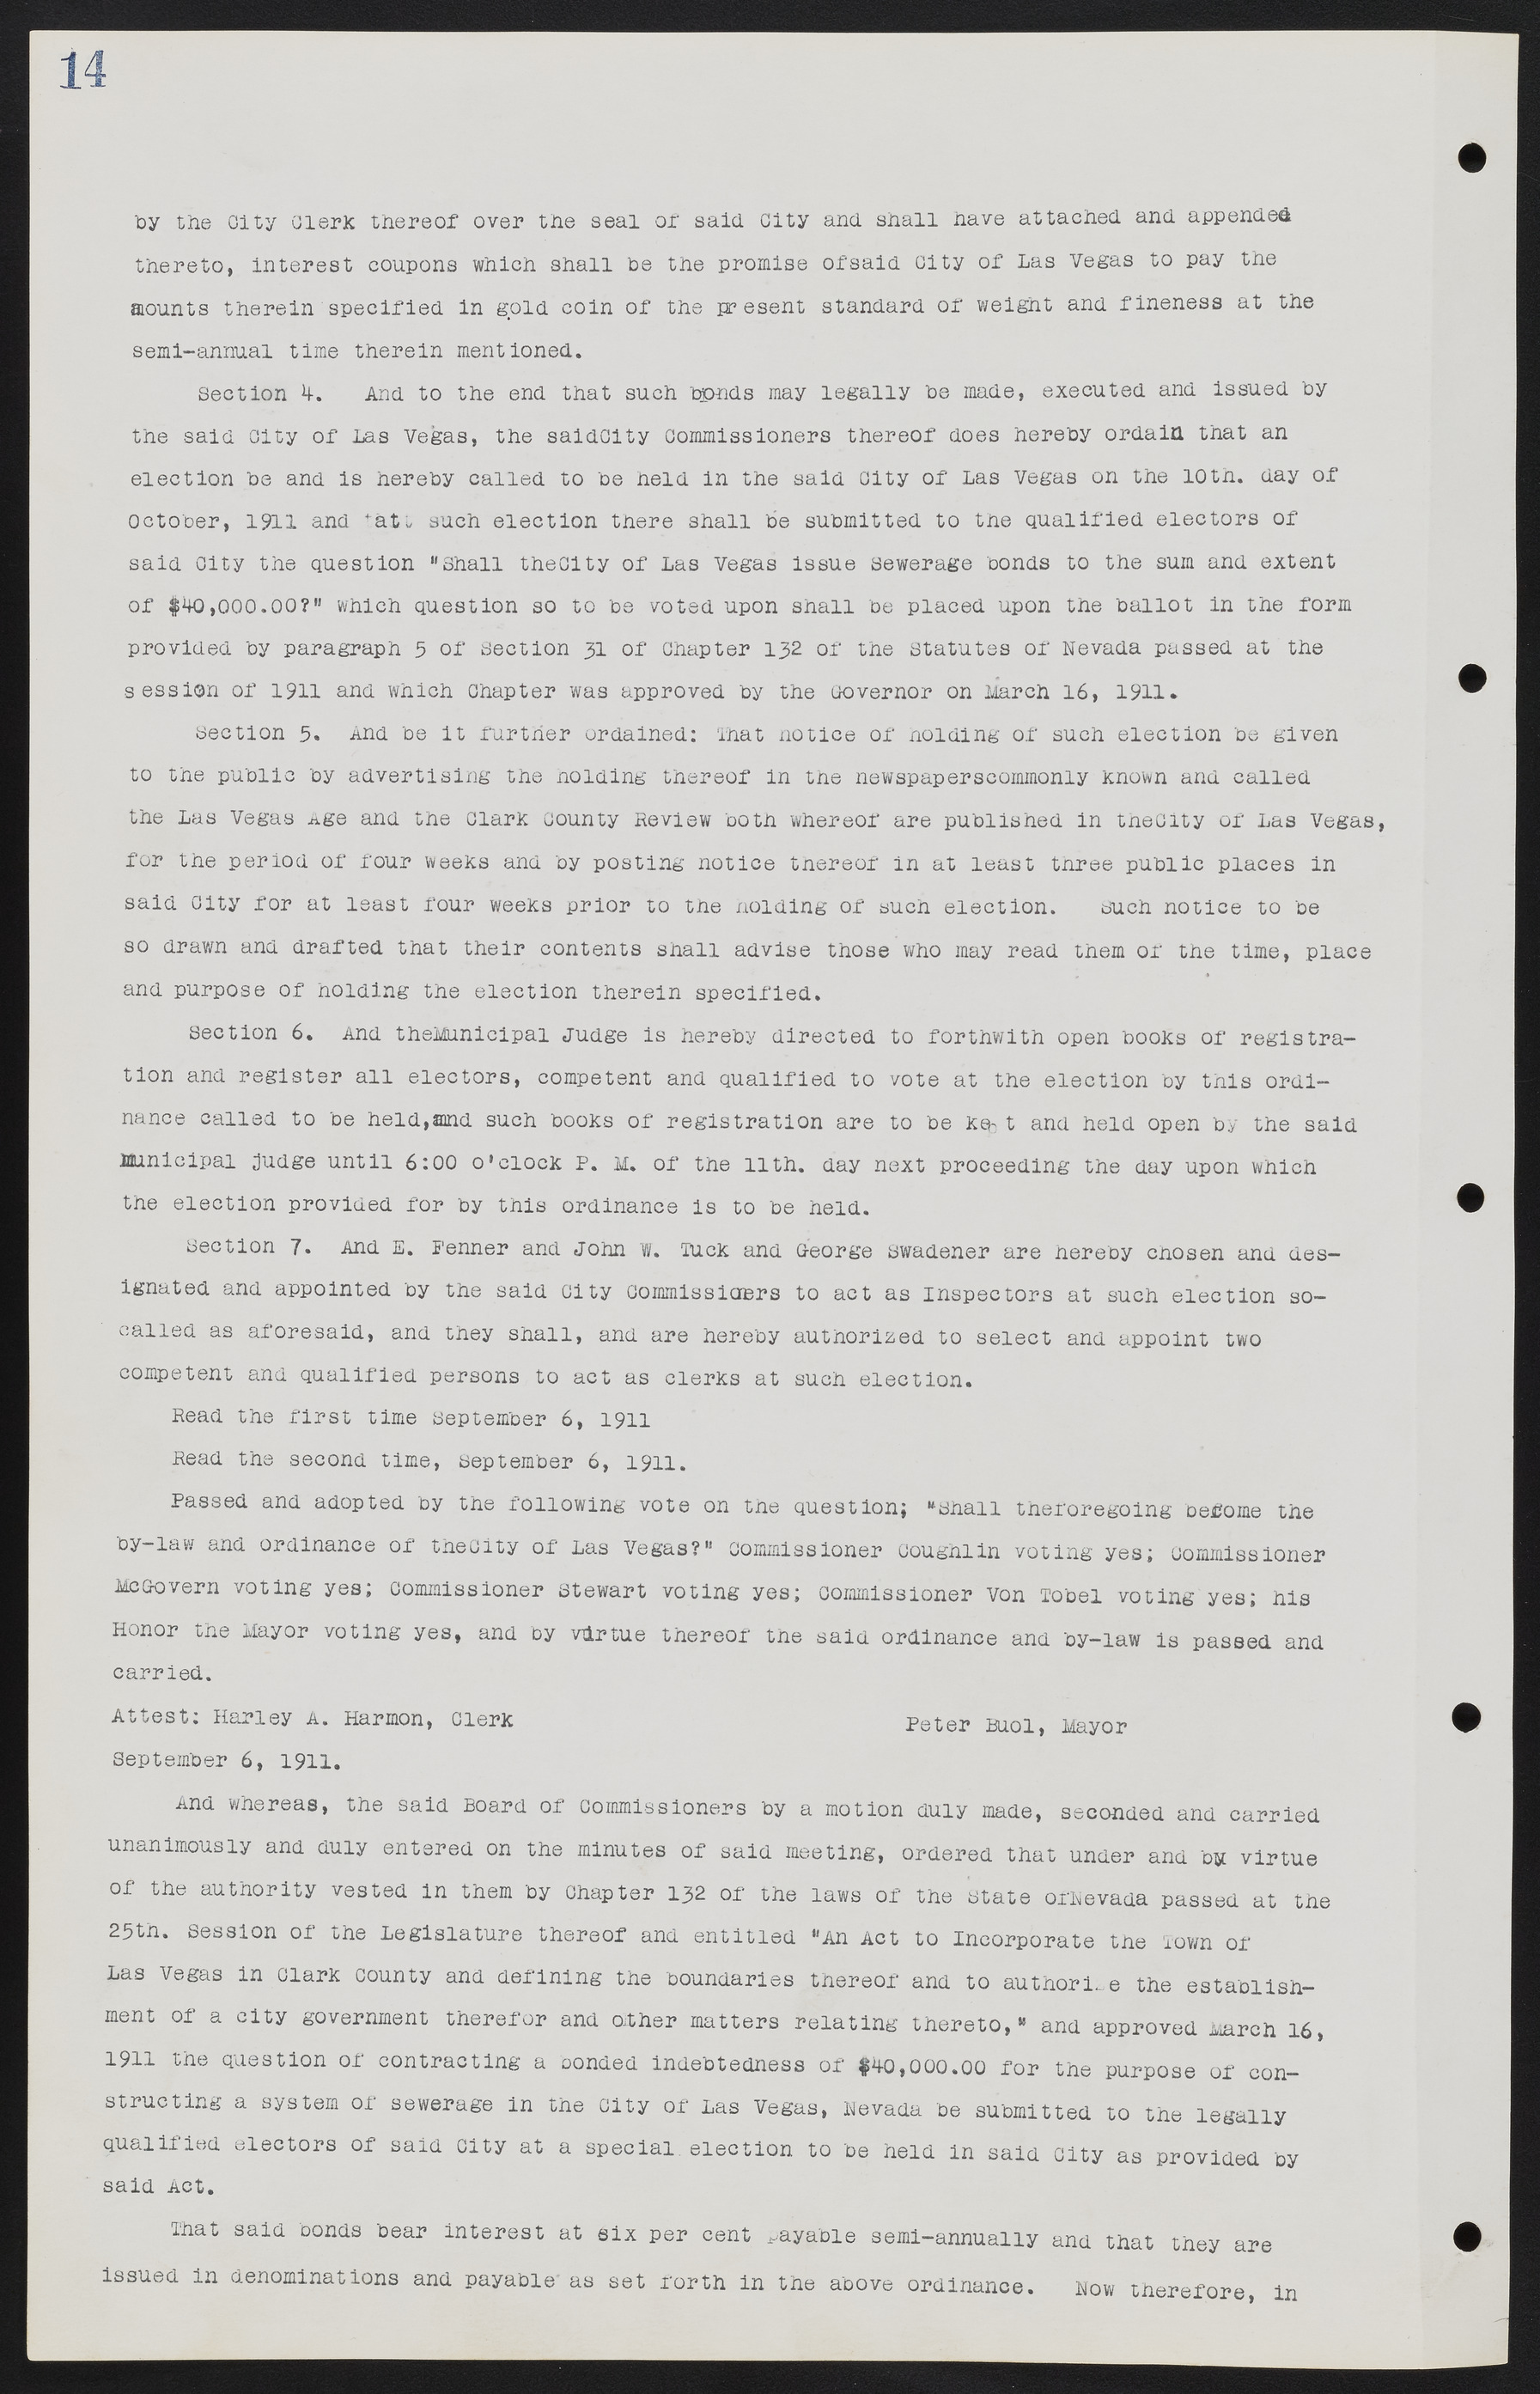 Las Vegas City Commission Minutes, June 22, 1911 to February 7, 1922, lvc000001-28